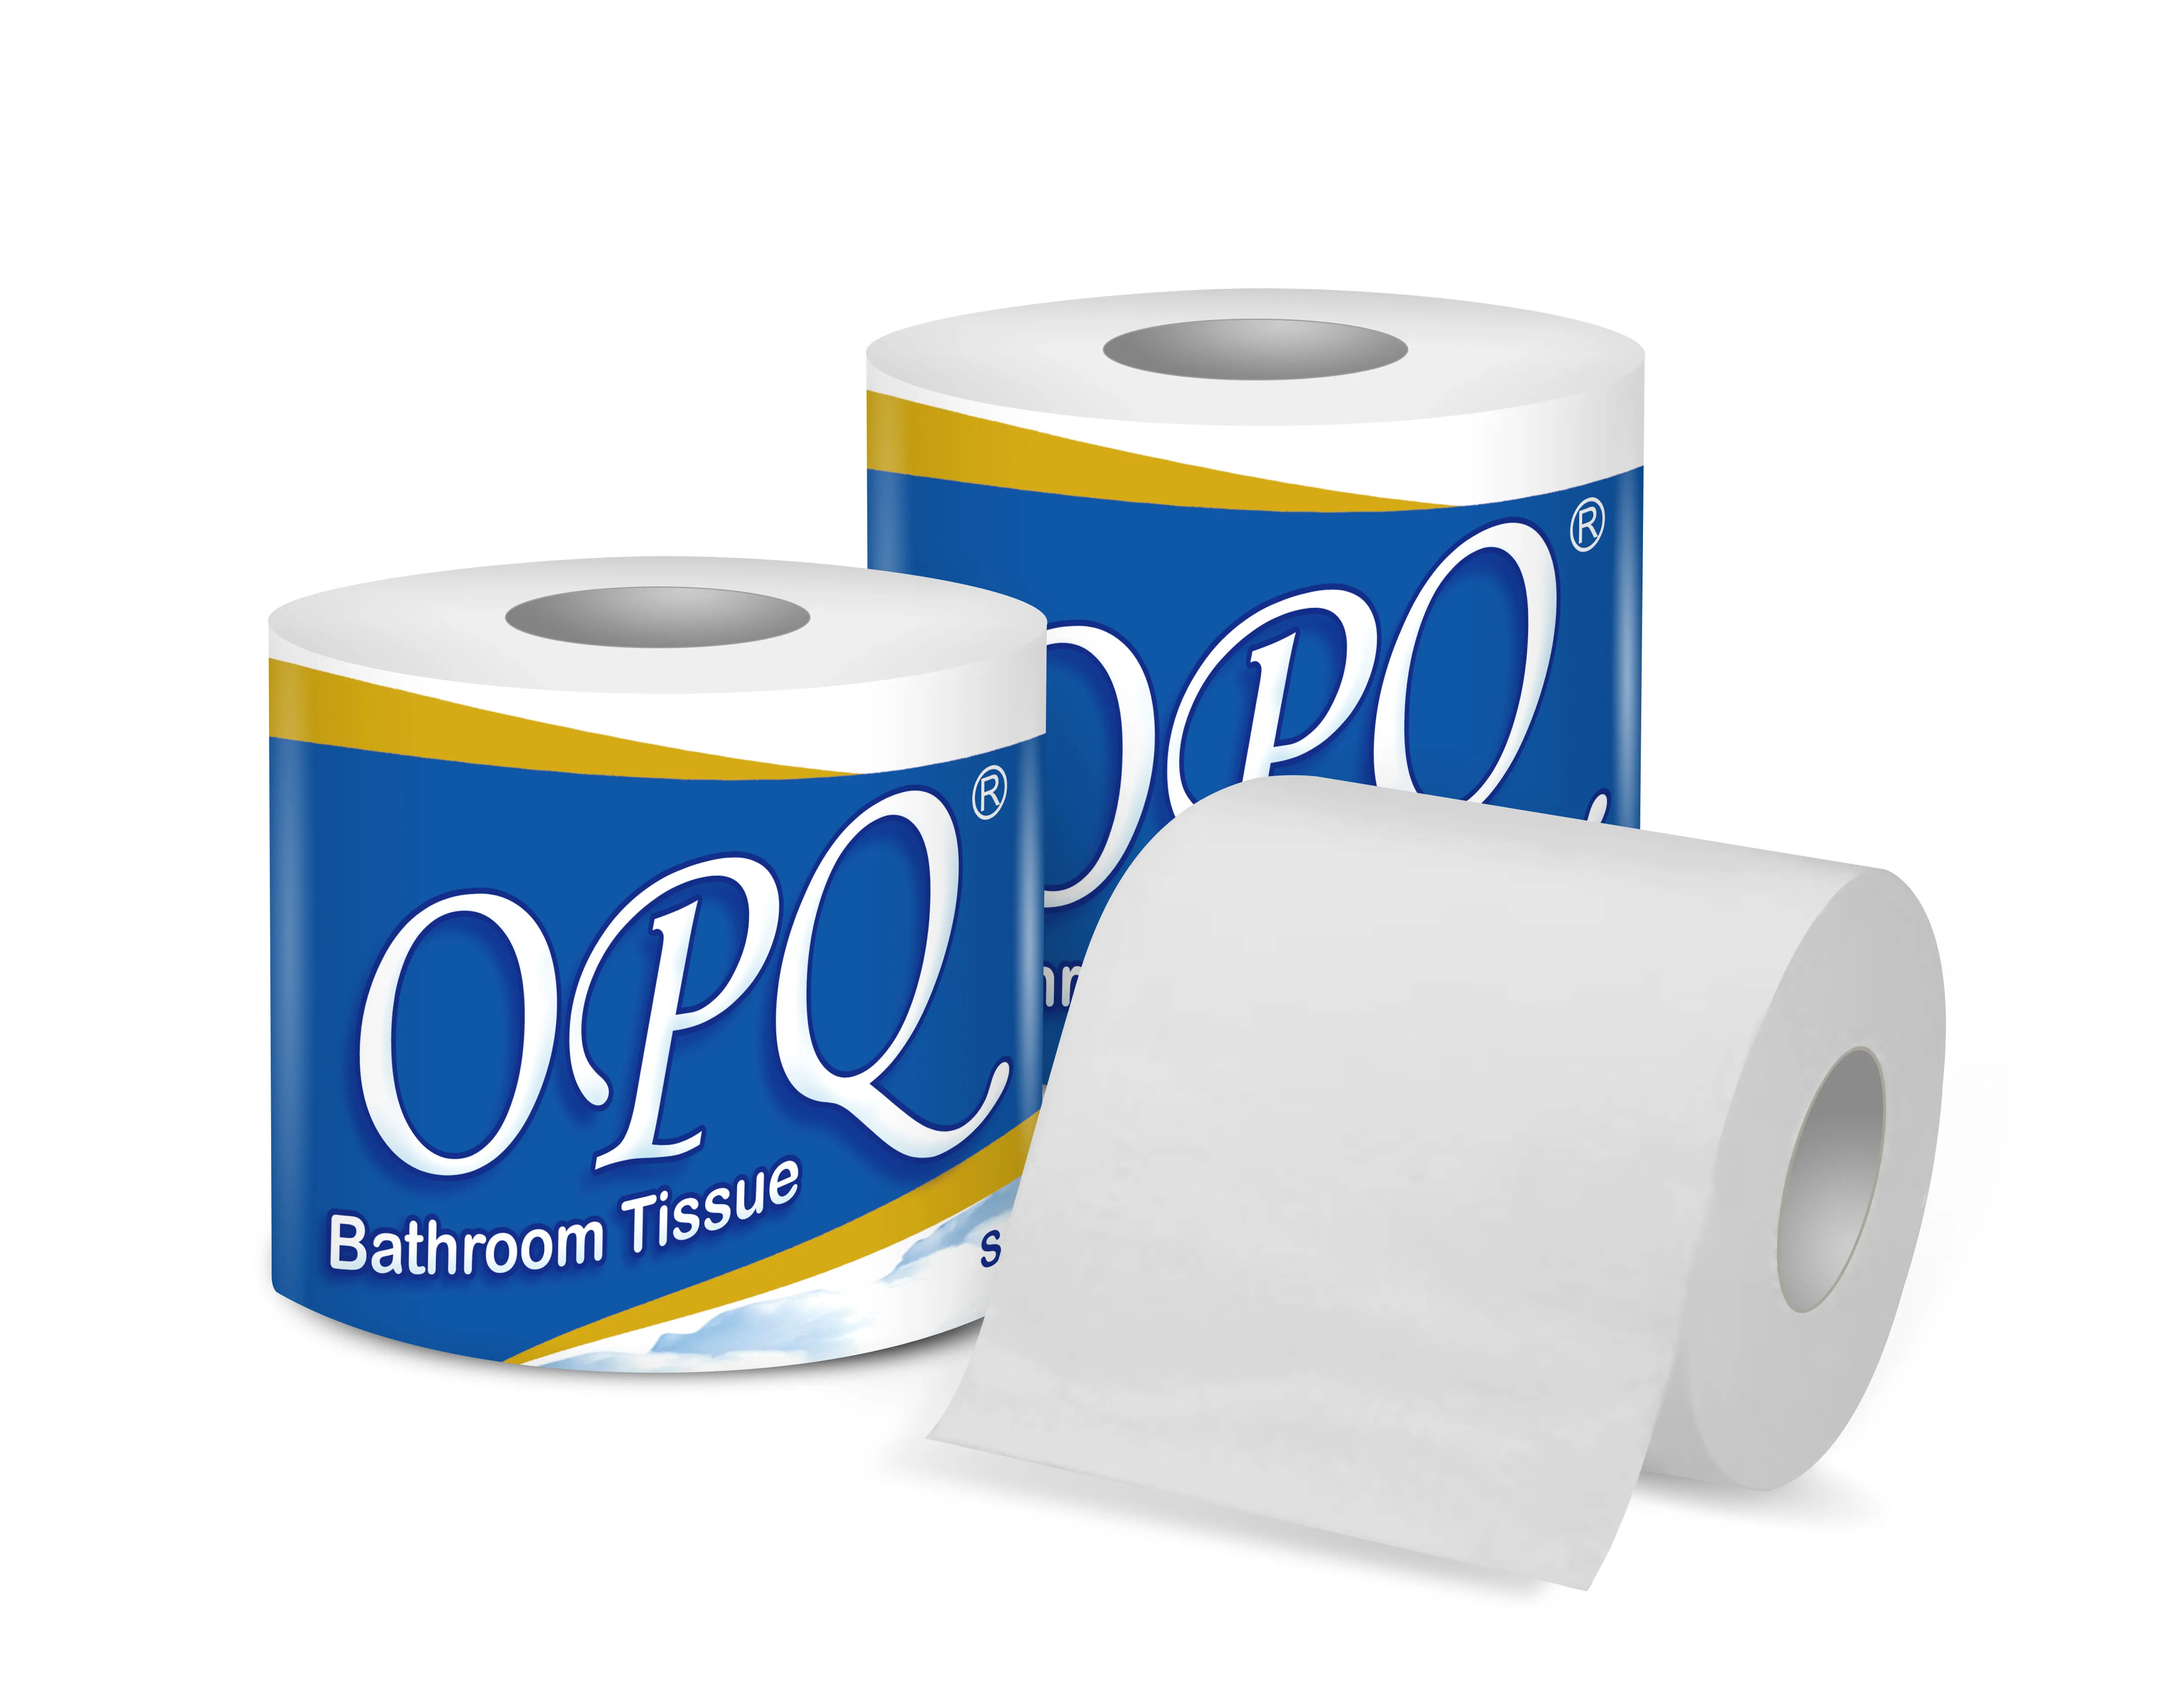 Пачка туалетной бумаги. Туалетная бумага. Дешевая туалетная бумага. Упаковка туалетной бумаги. Туалетная бумага рисунок.